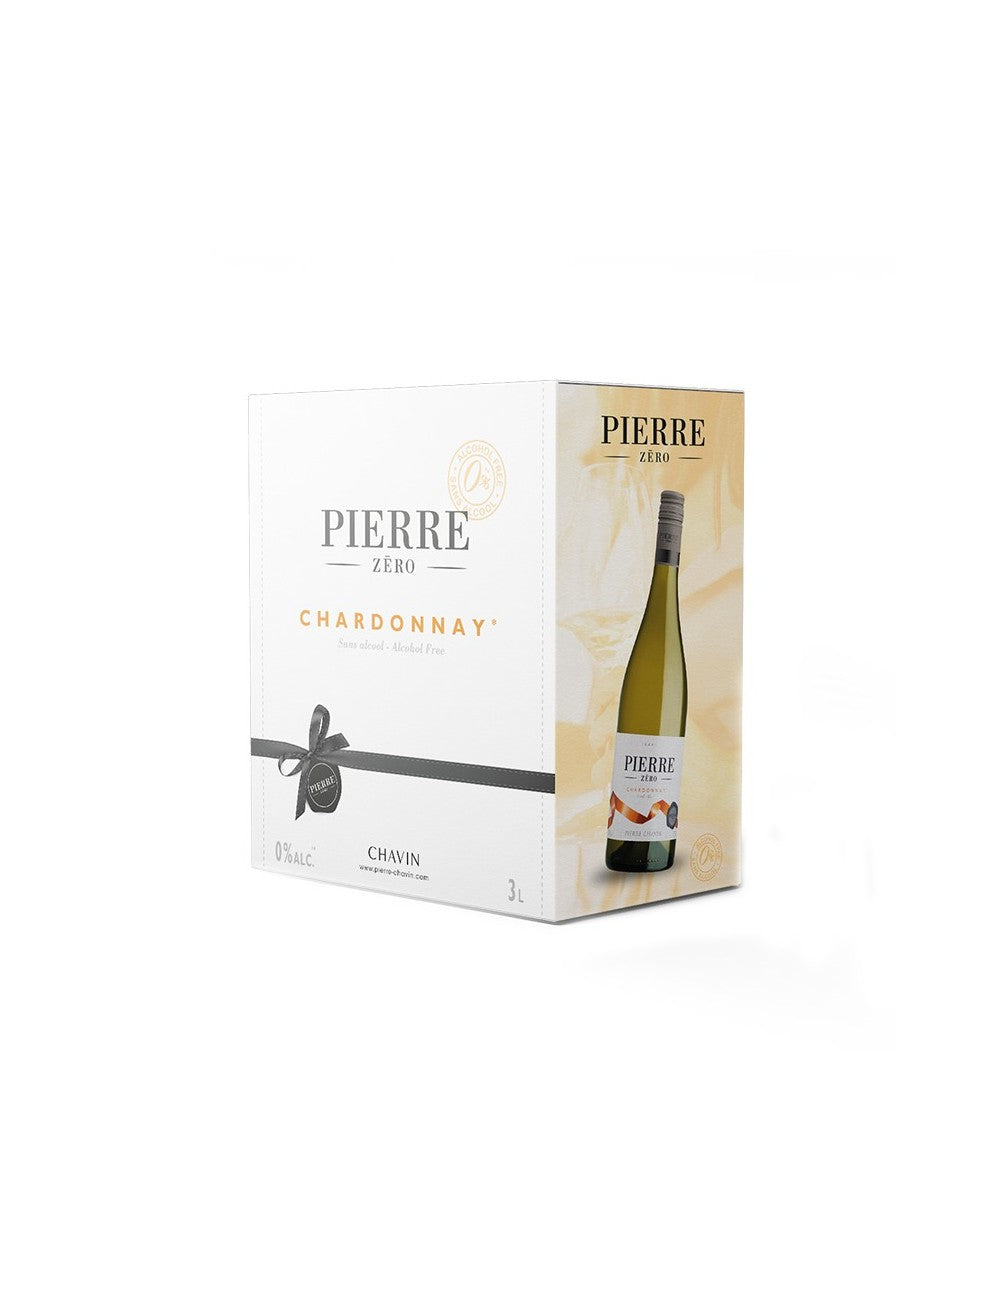 Pierre Zéro Alcohol Free Chardonnay Wine Box - Non-Alcoholic Boxed White Wine